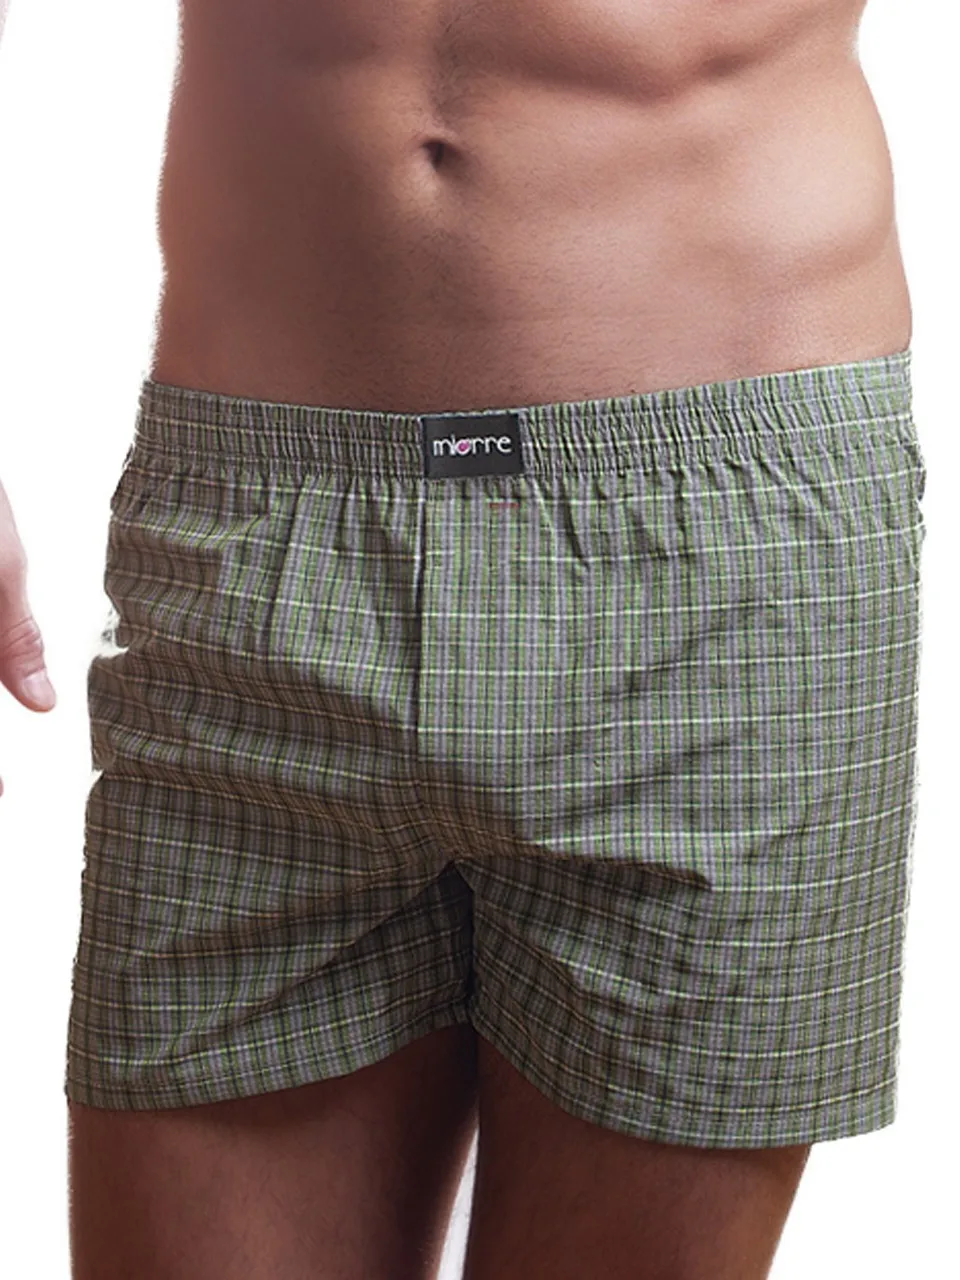 Miorre Oem Wholesale Men's Underwear Classic Style Cotton Patterned ...